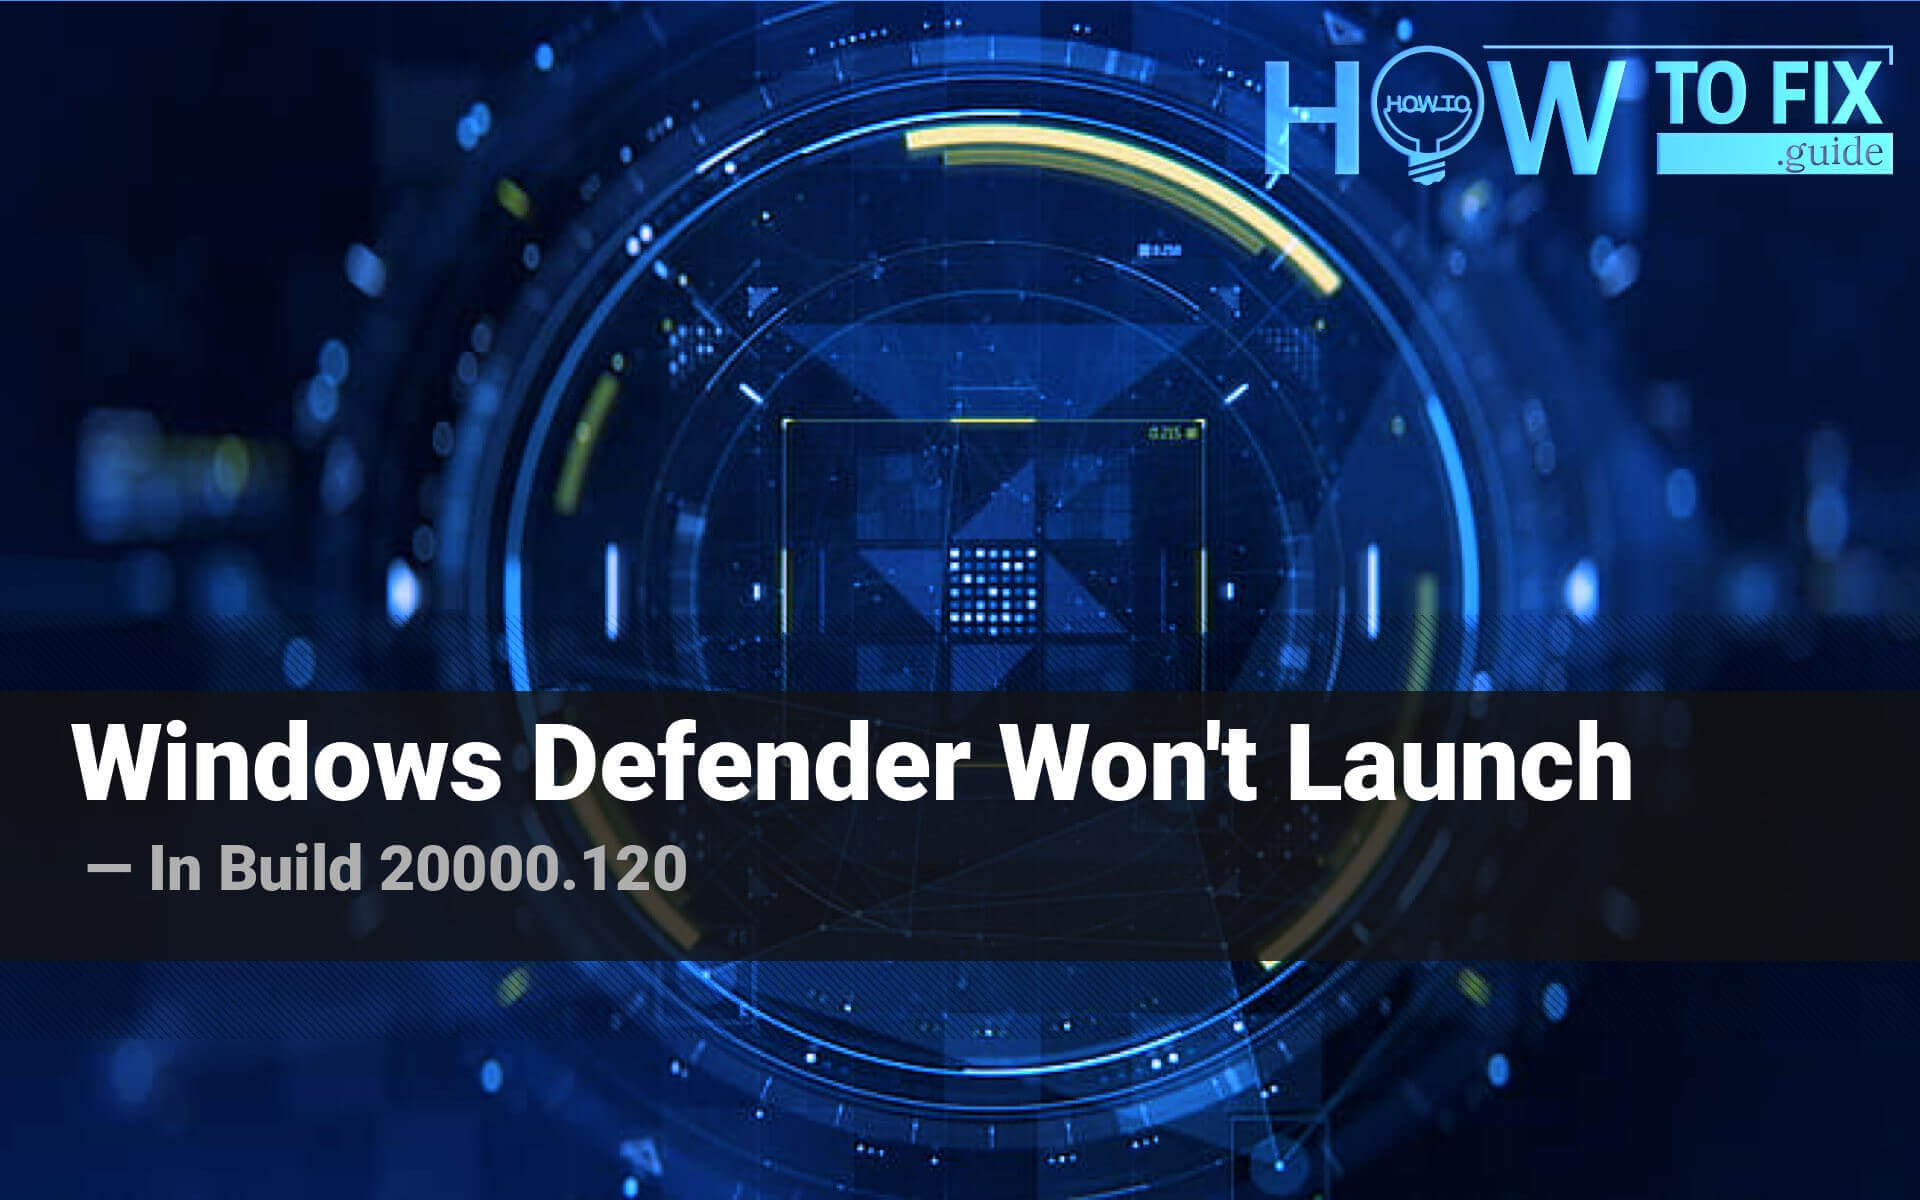 Windows Defender Won't Launch In Build 20000.120